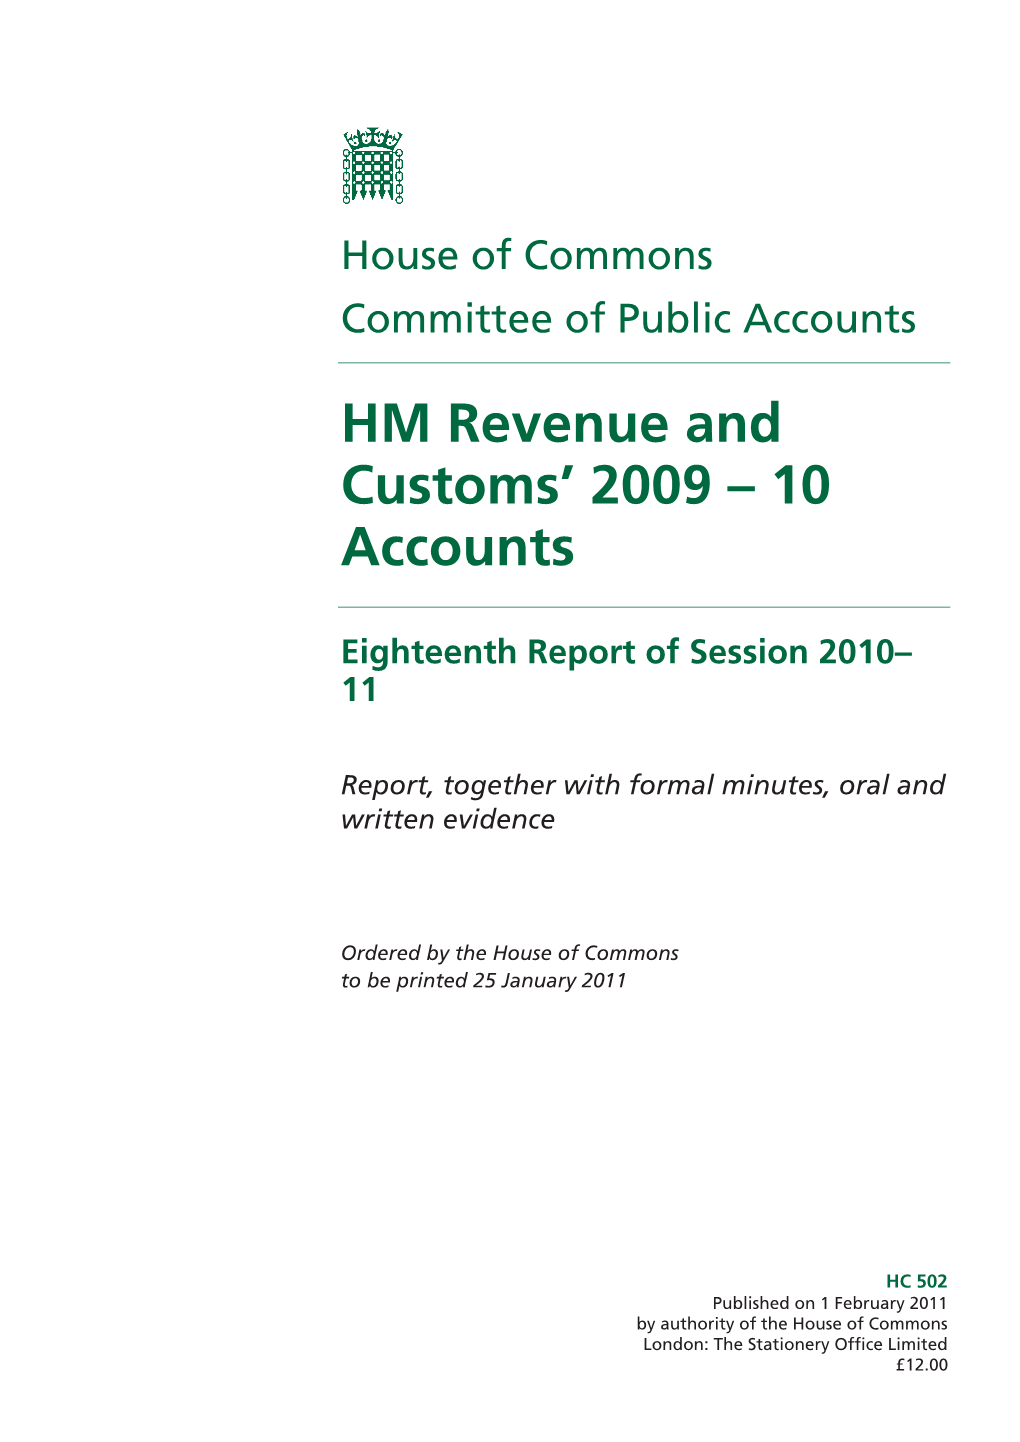 HM Revenue and Customs' 2009 – 10 Accounts